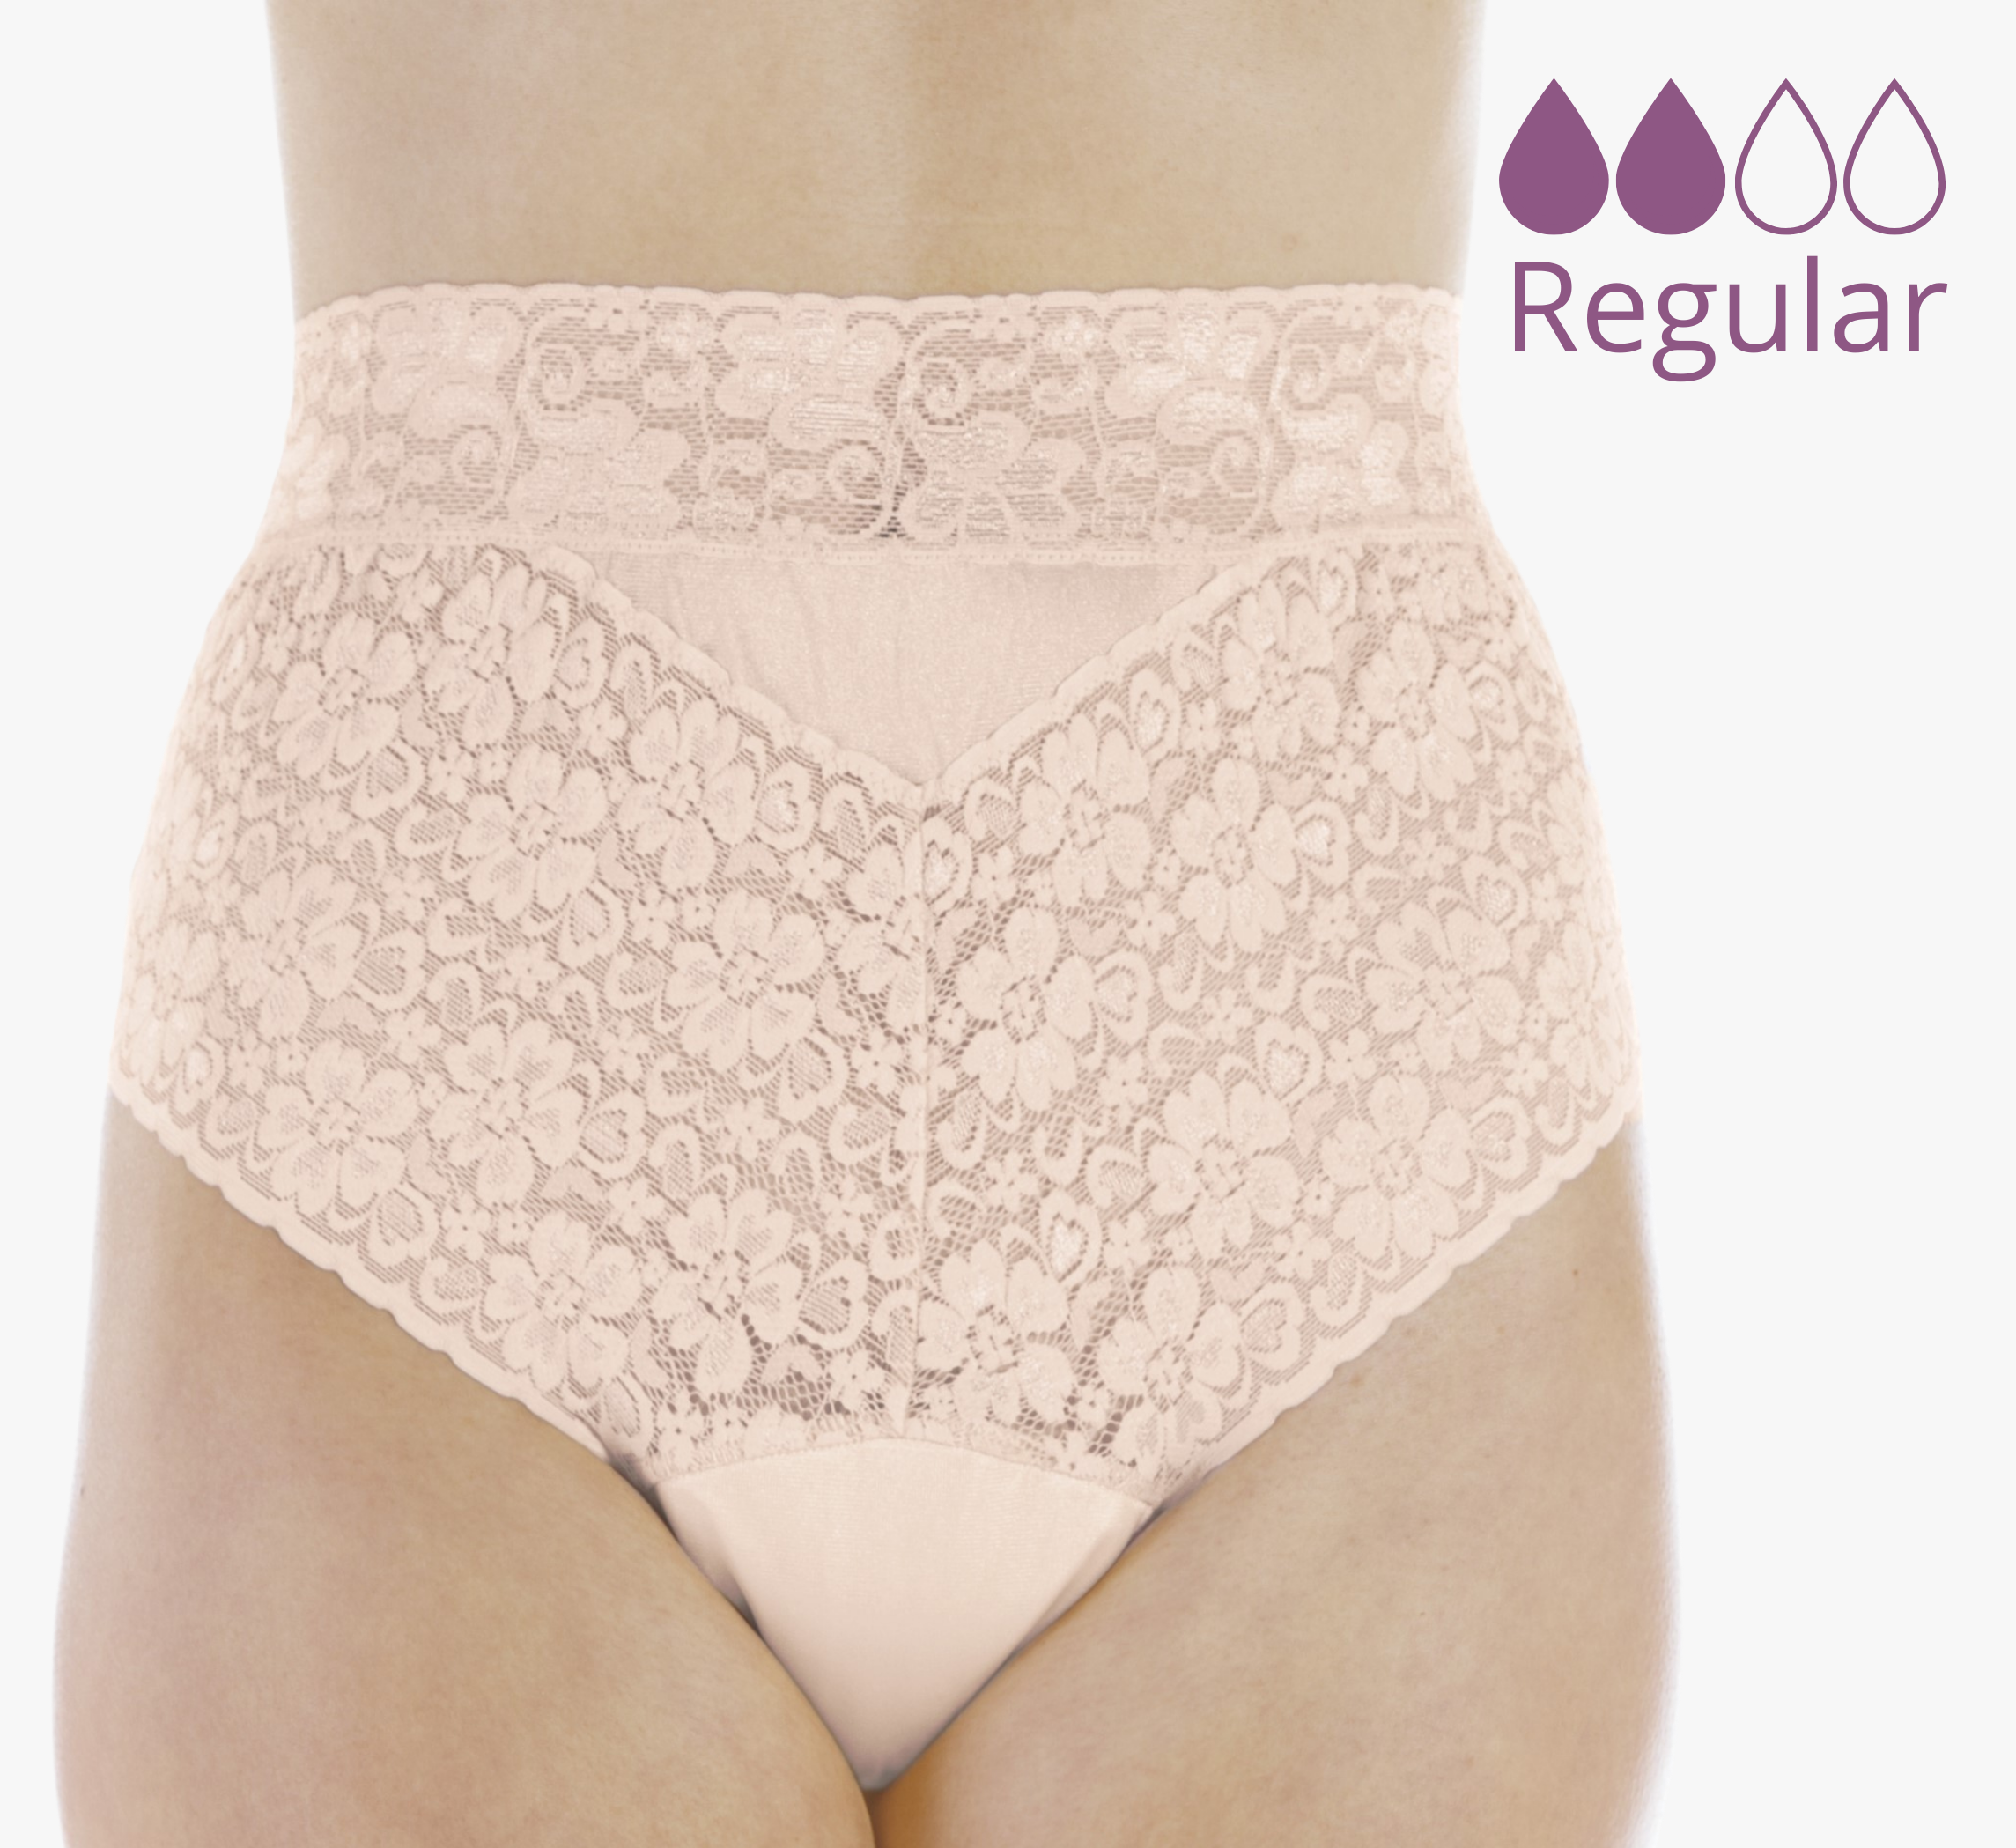 Reusable Women's Incontinence Underwear - Wearever Australia